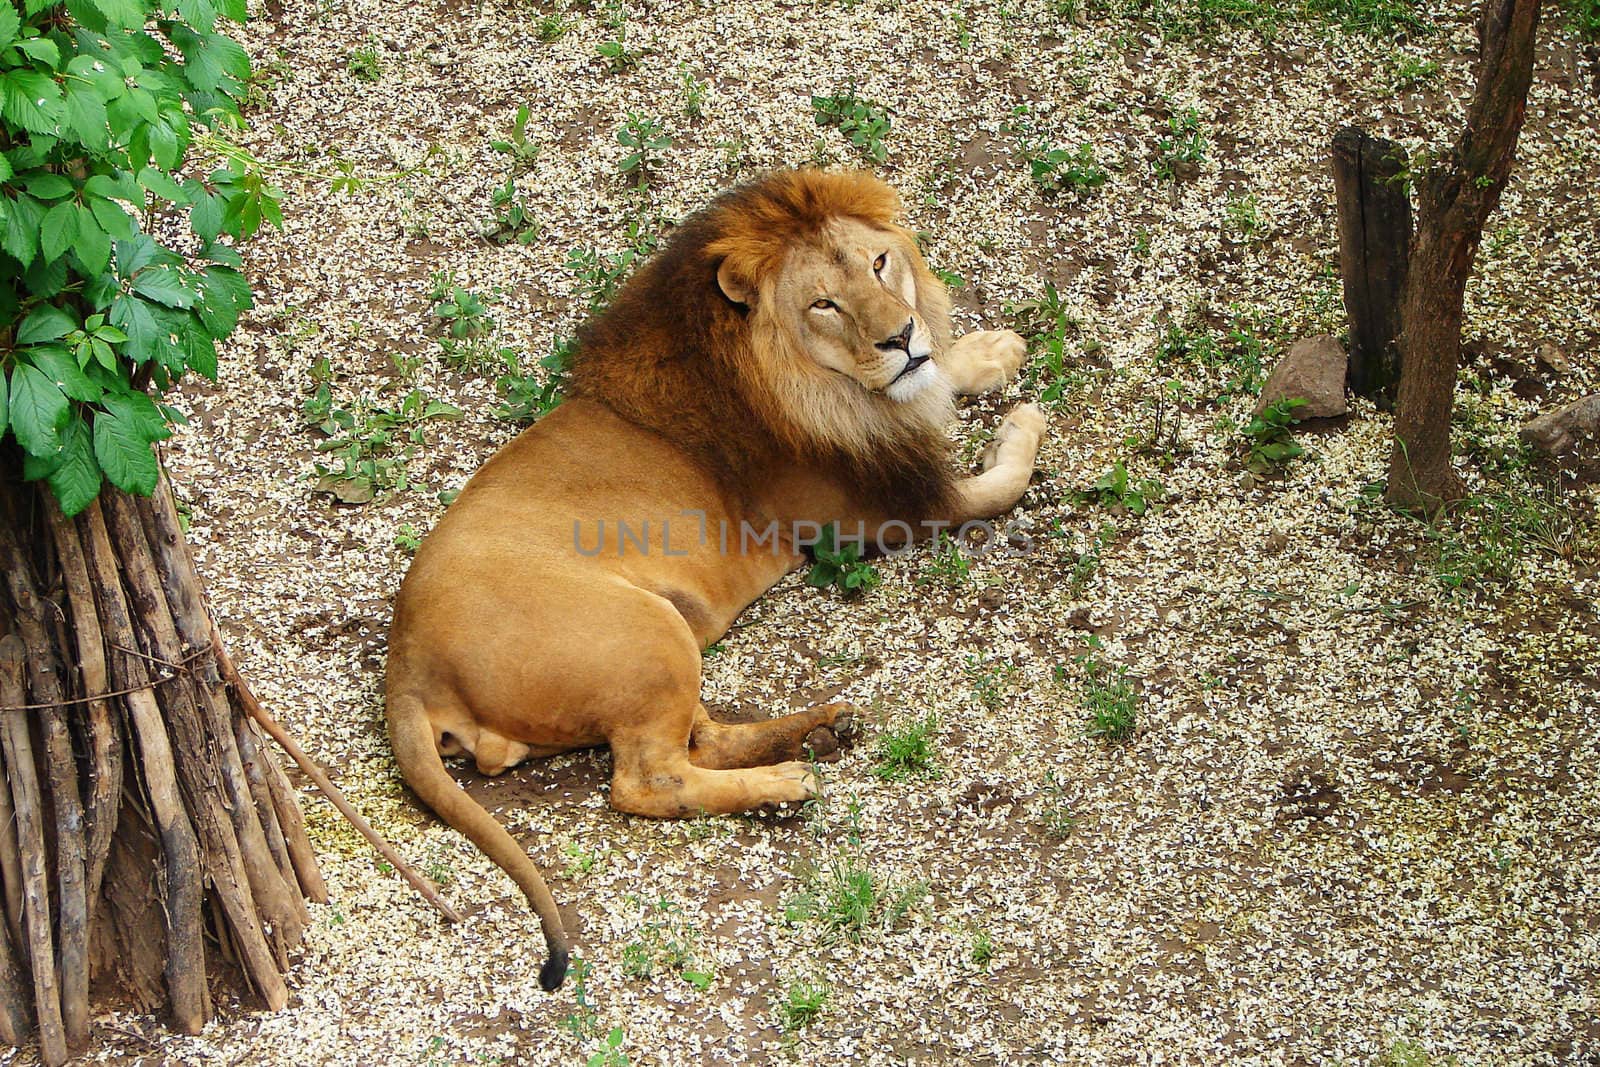 Resting lion